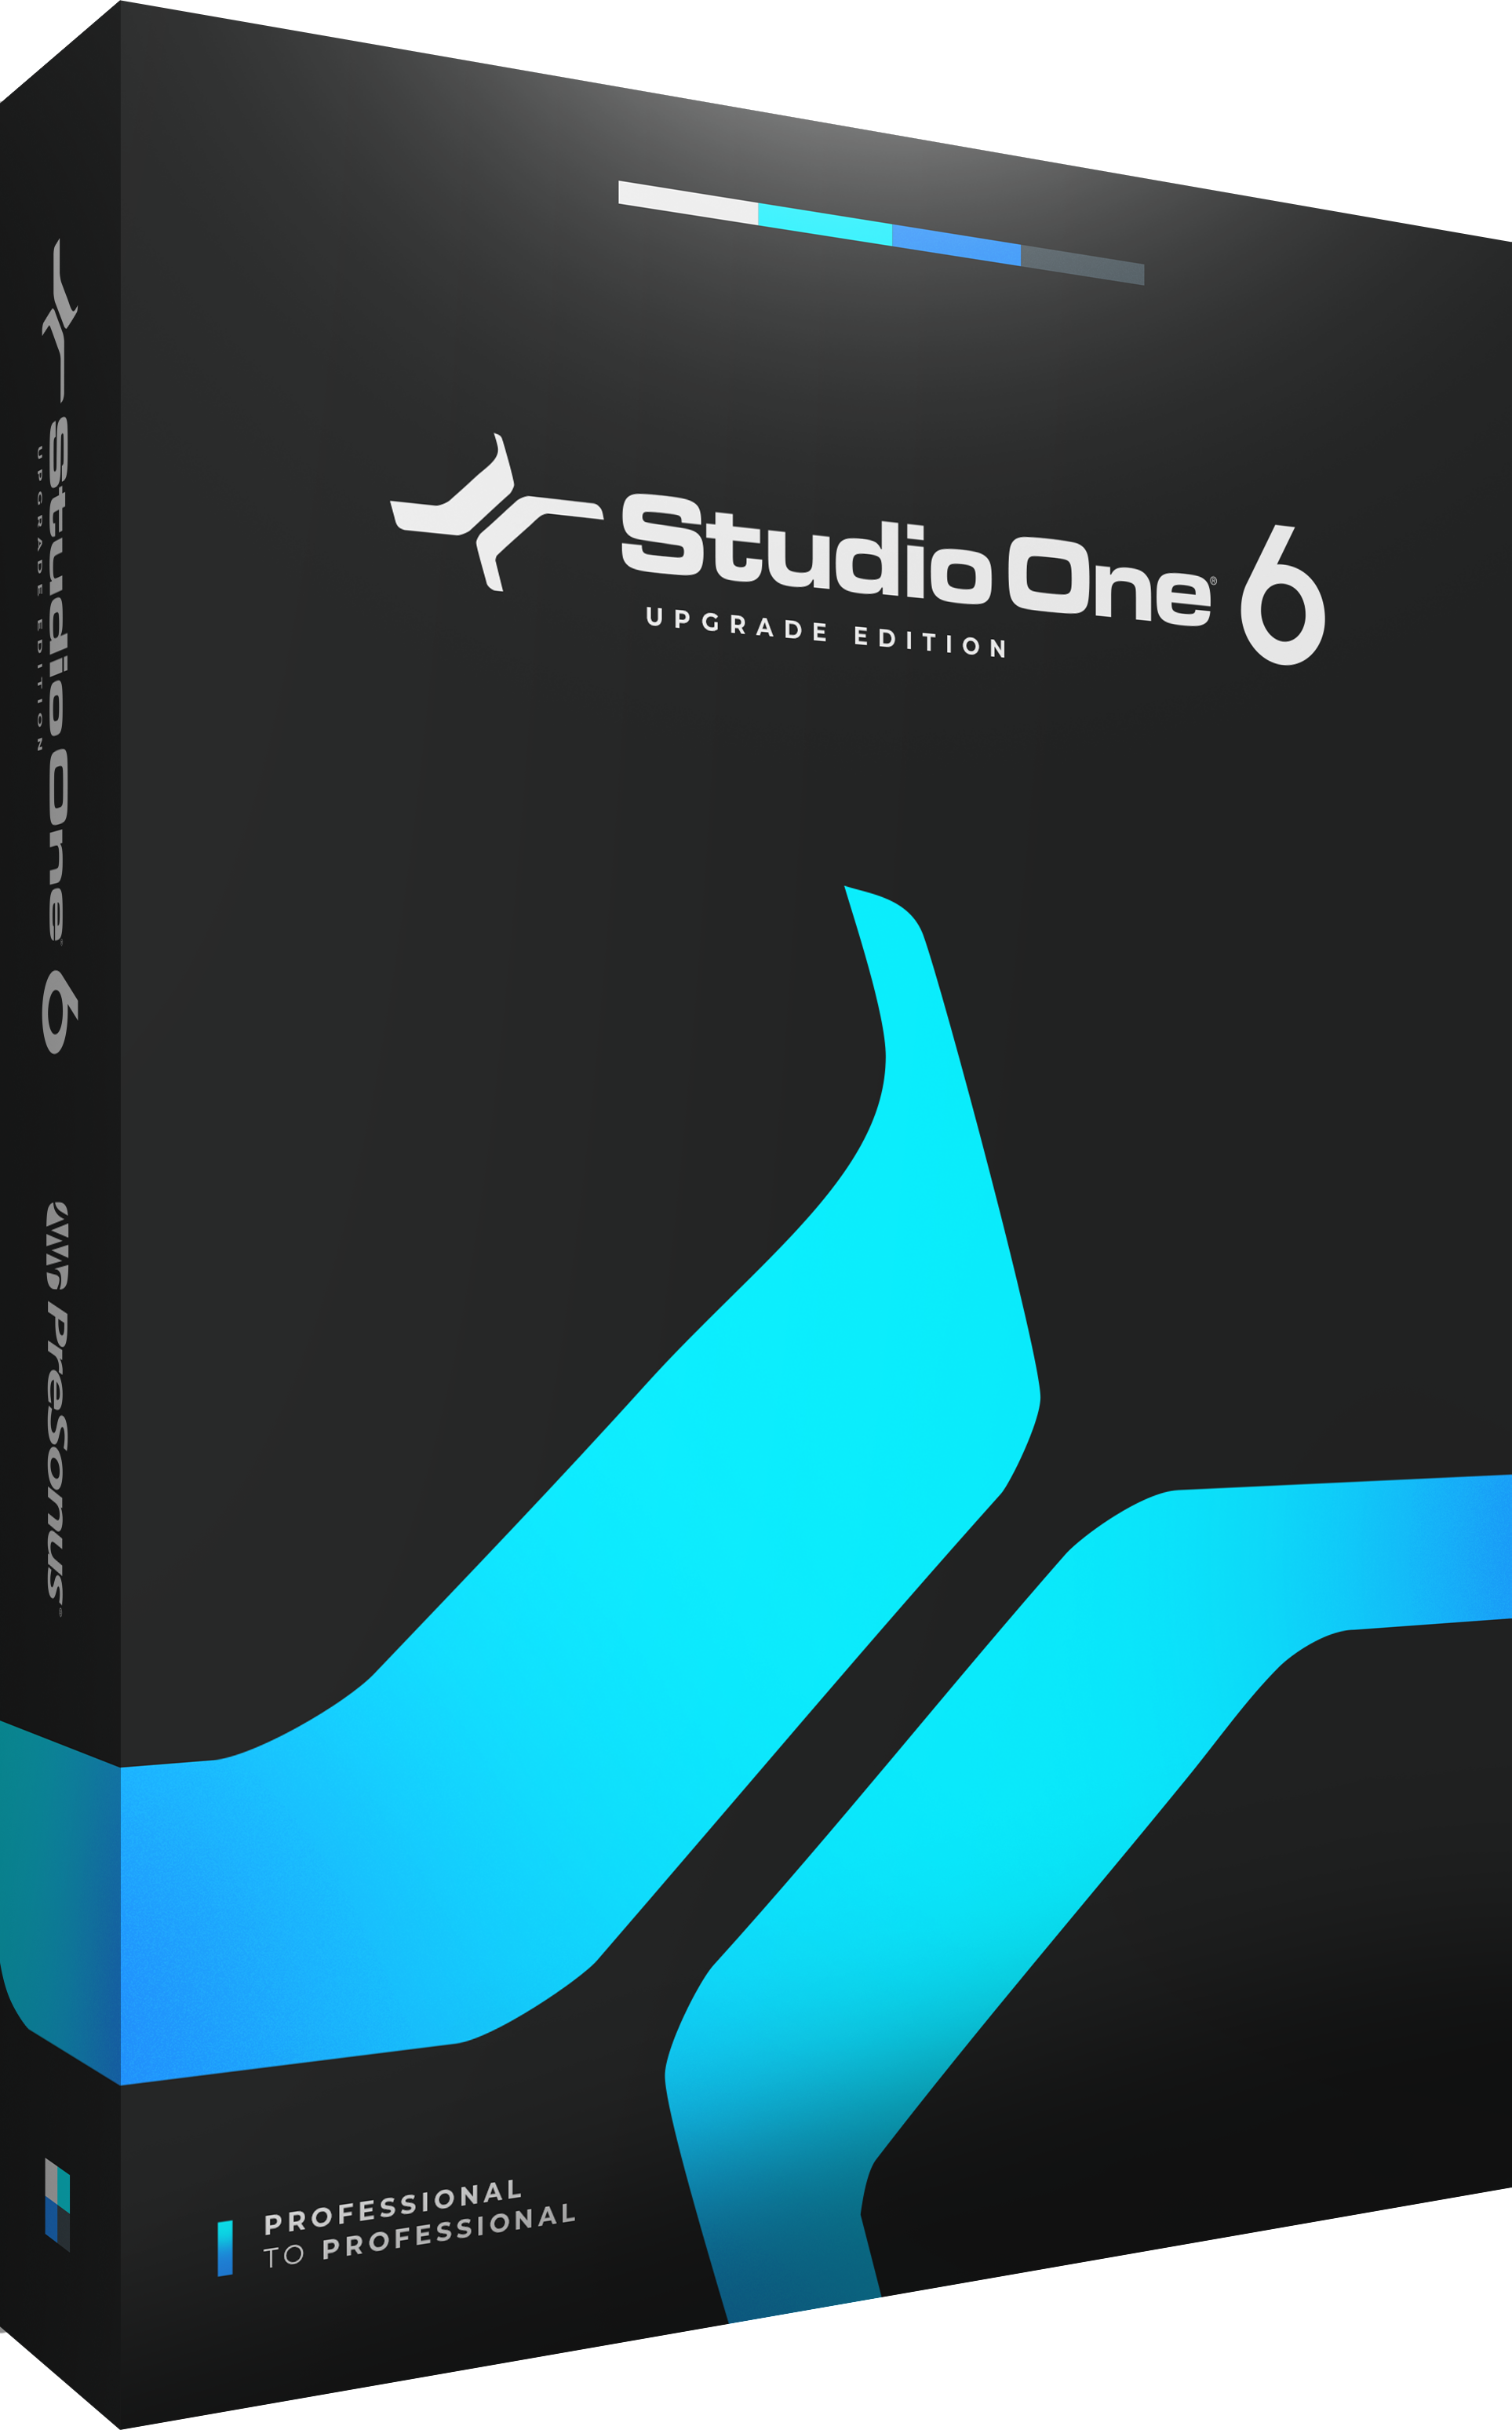 PreSonus Studio One 6 Professional Upgrade from Professional/Producer